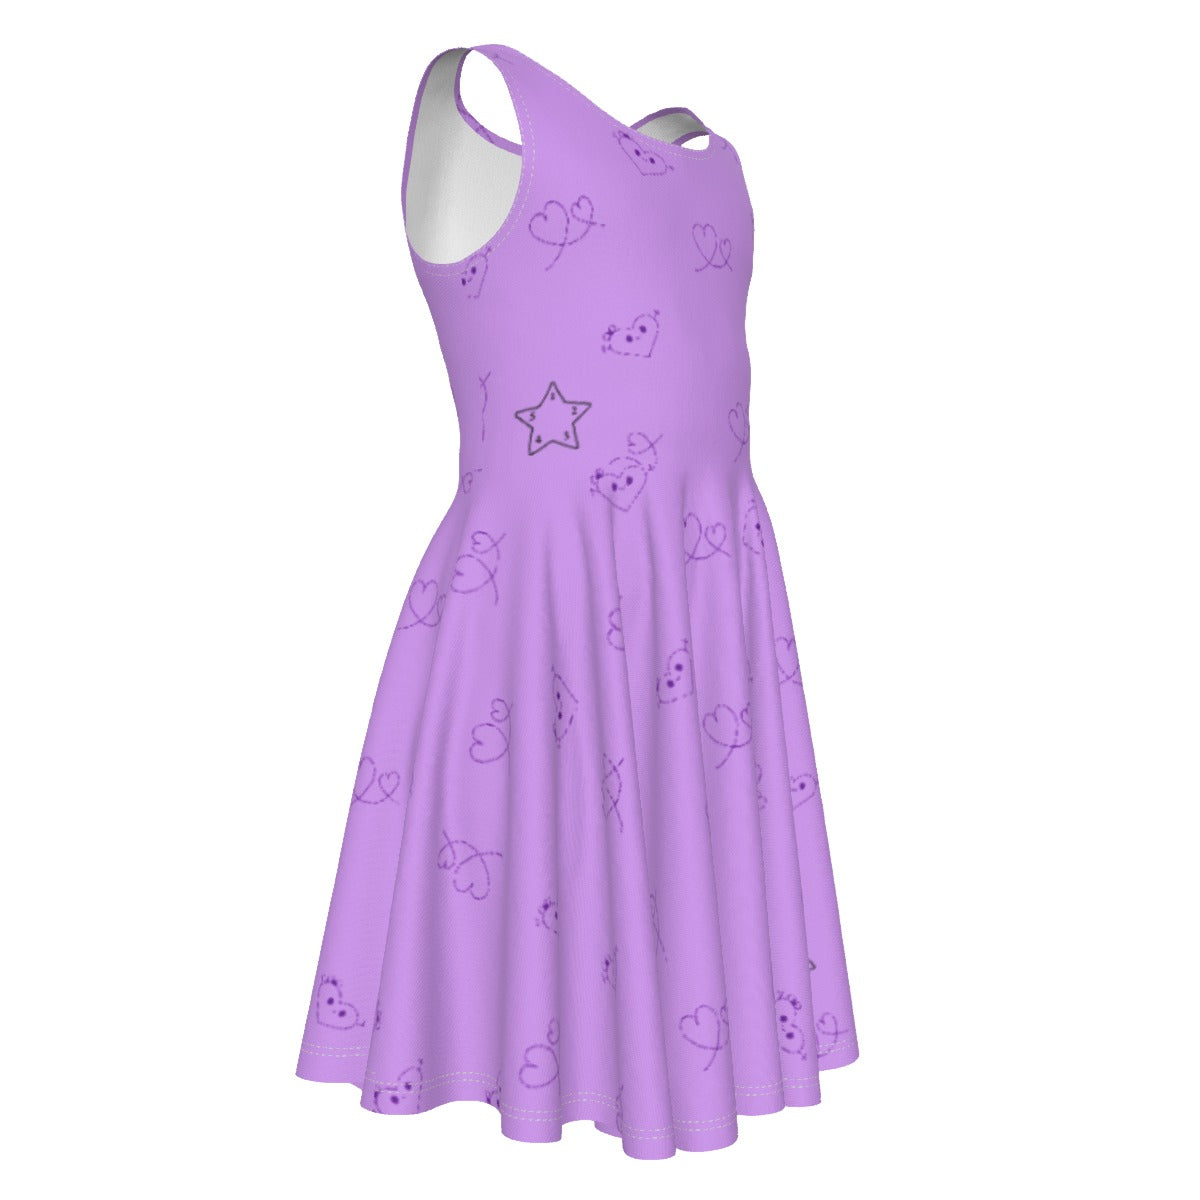 Girls Purple Heart Dress - Clothes that Calm